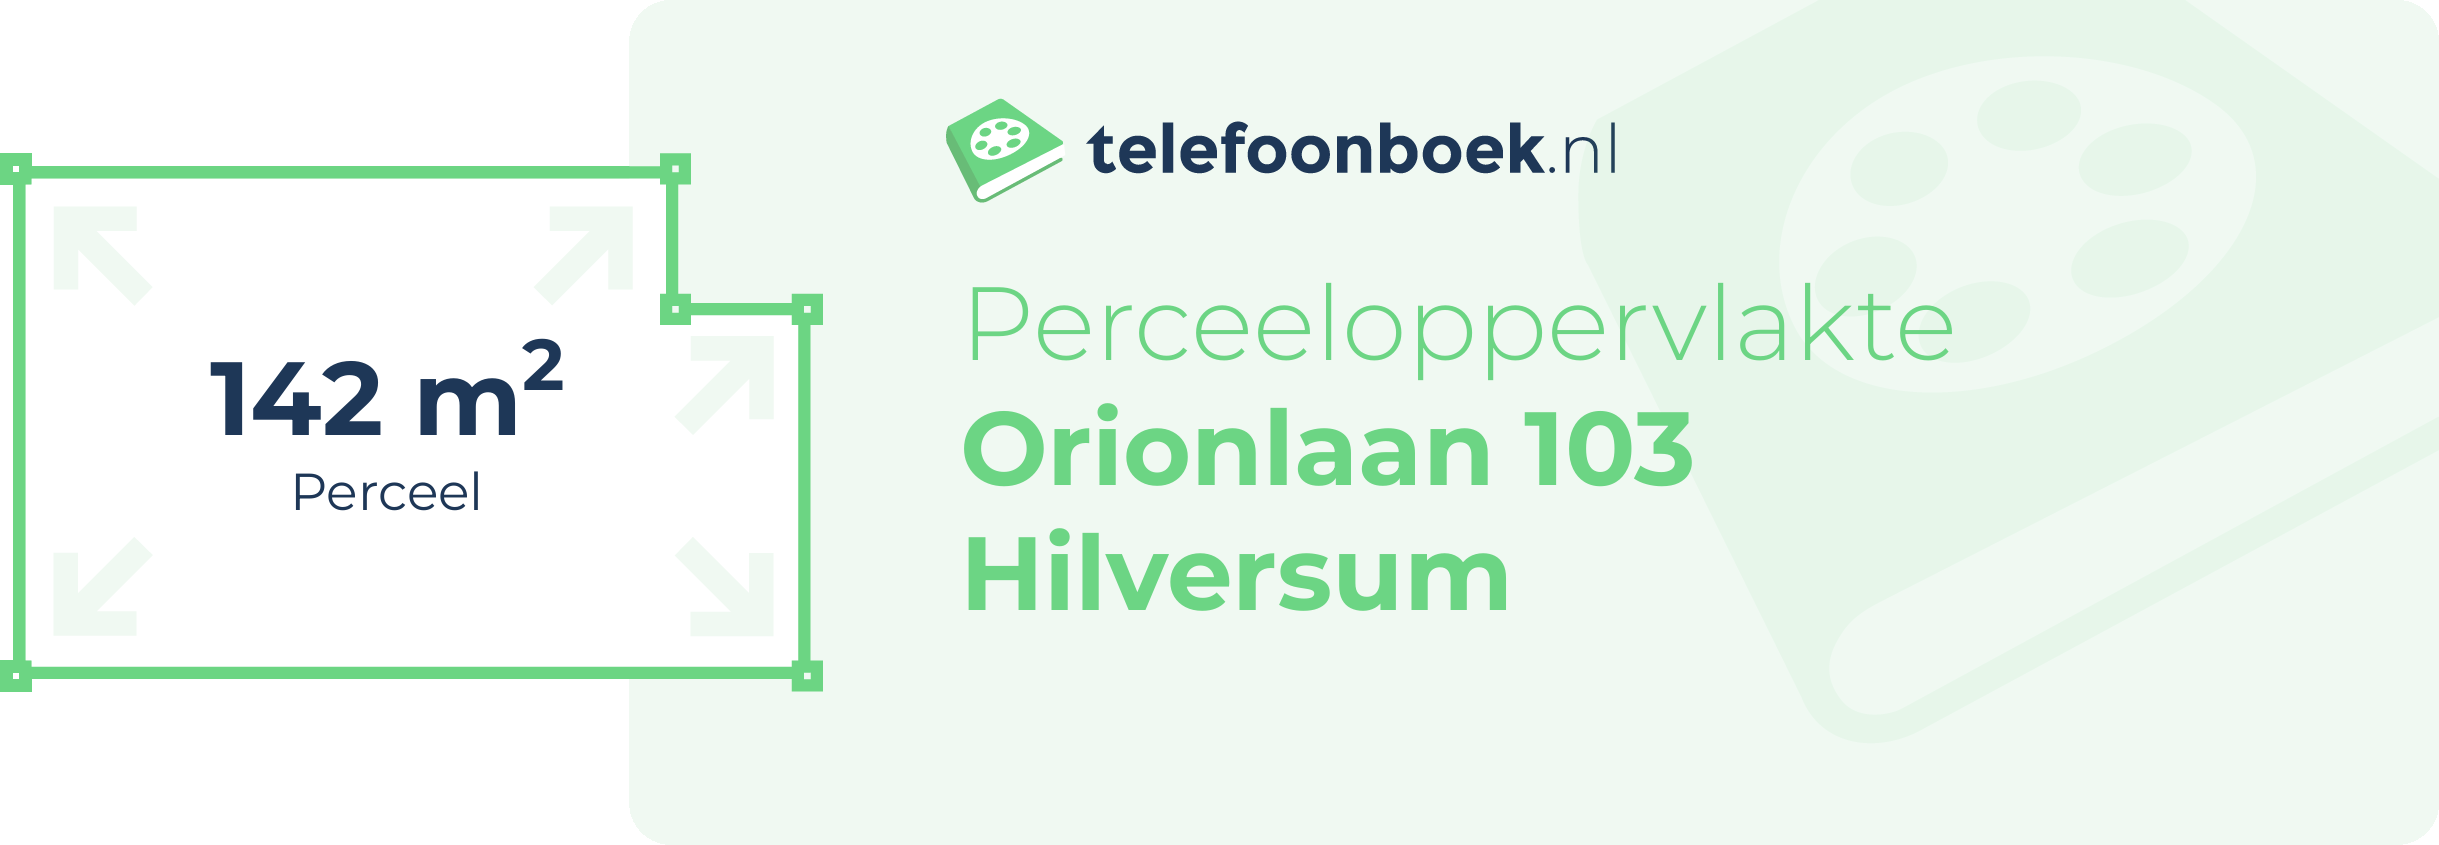 Perceeloppervlakte Orionlaan 103 Hilversum